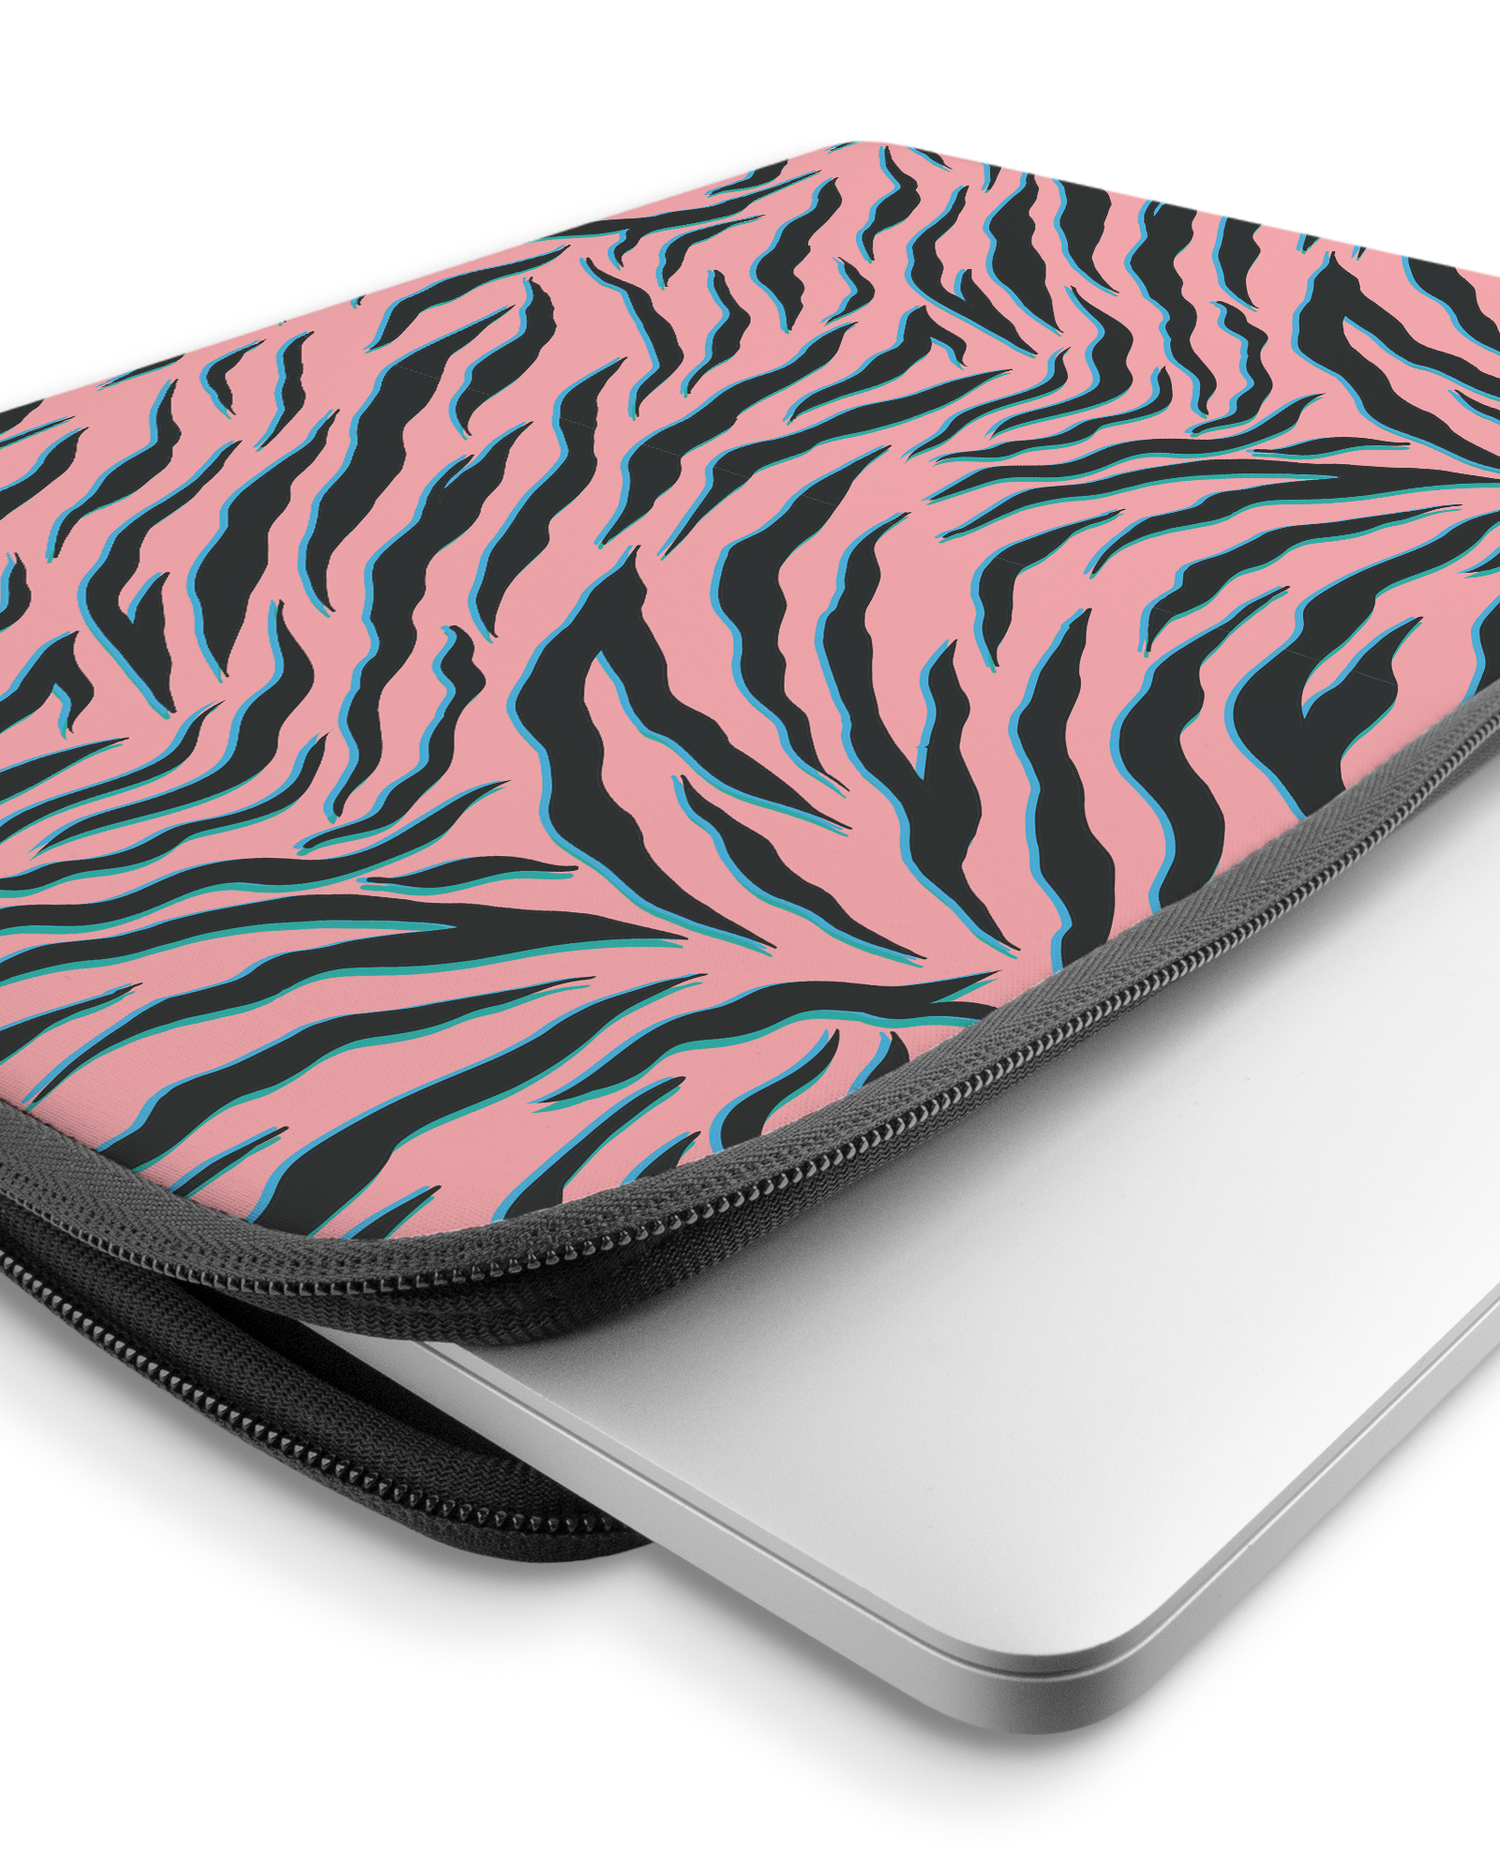 Pink Zebra Laptop Case 15-16 inch with device inside